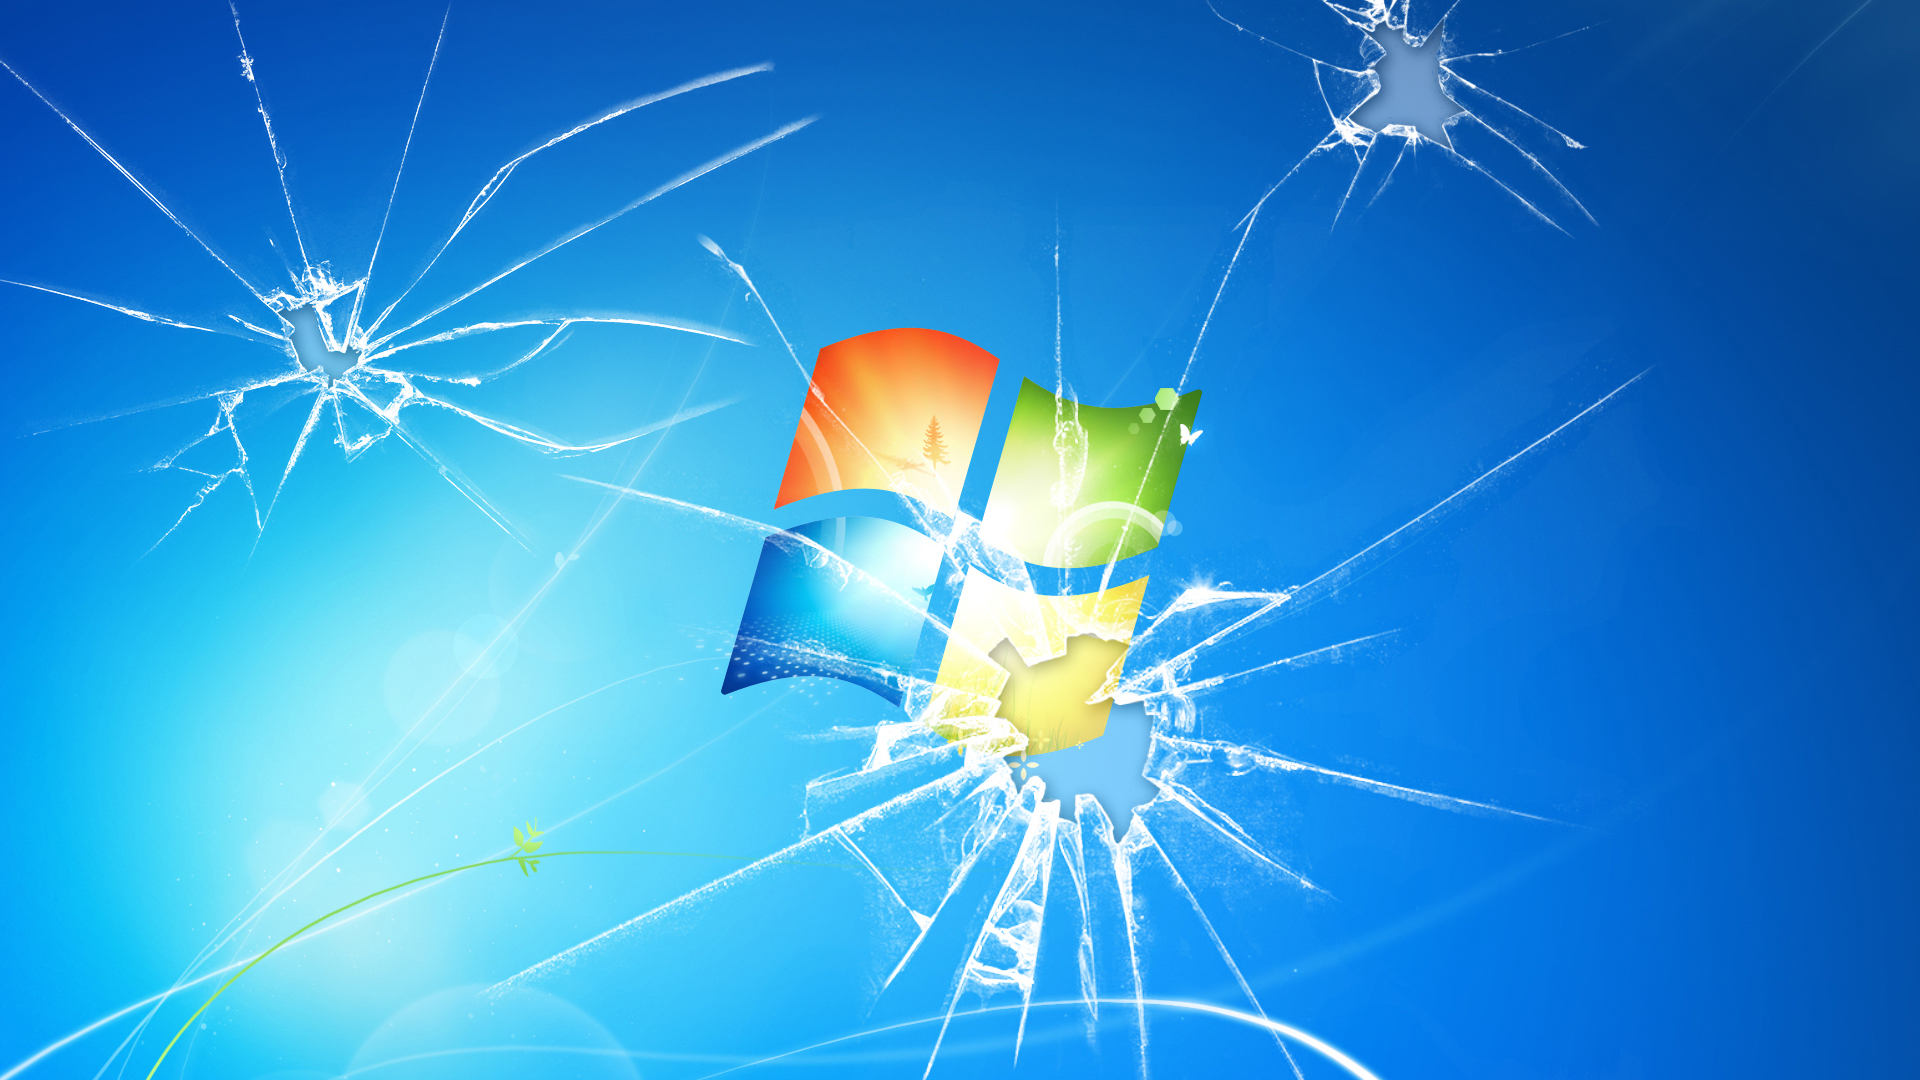 Broken Glass Windows Desktop Wallpaper